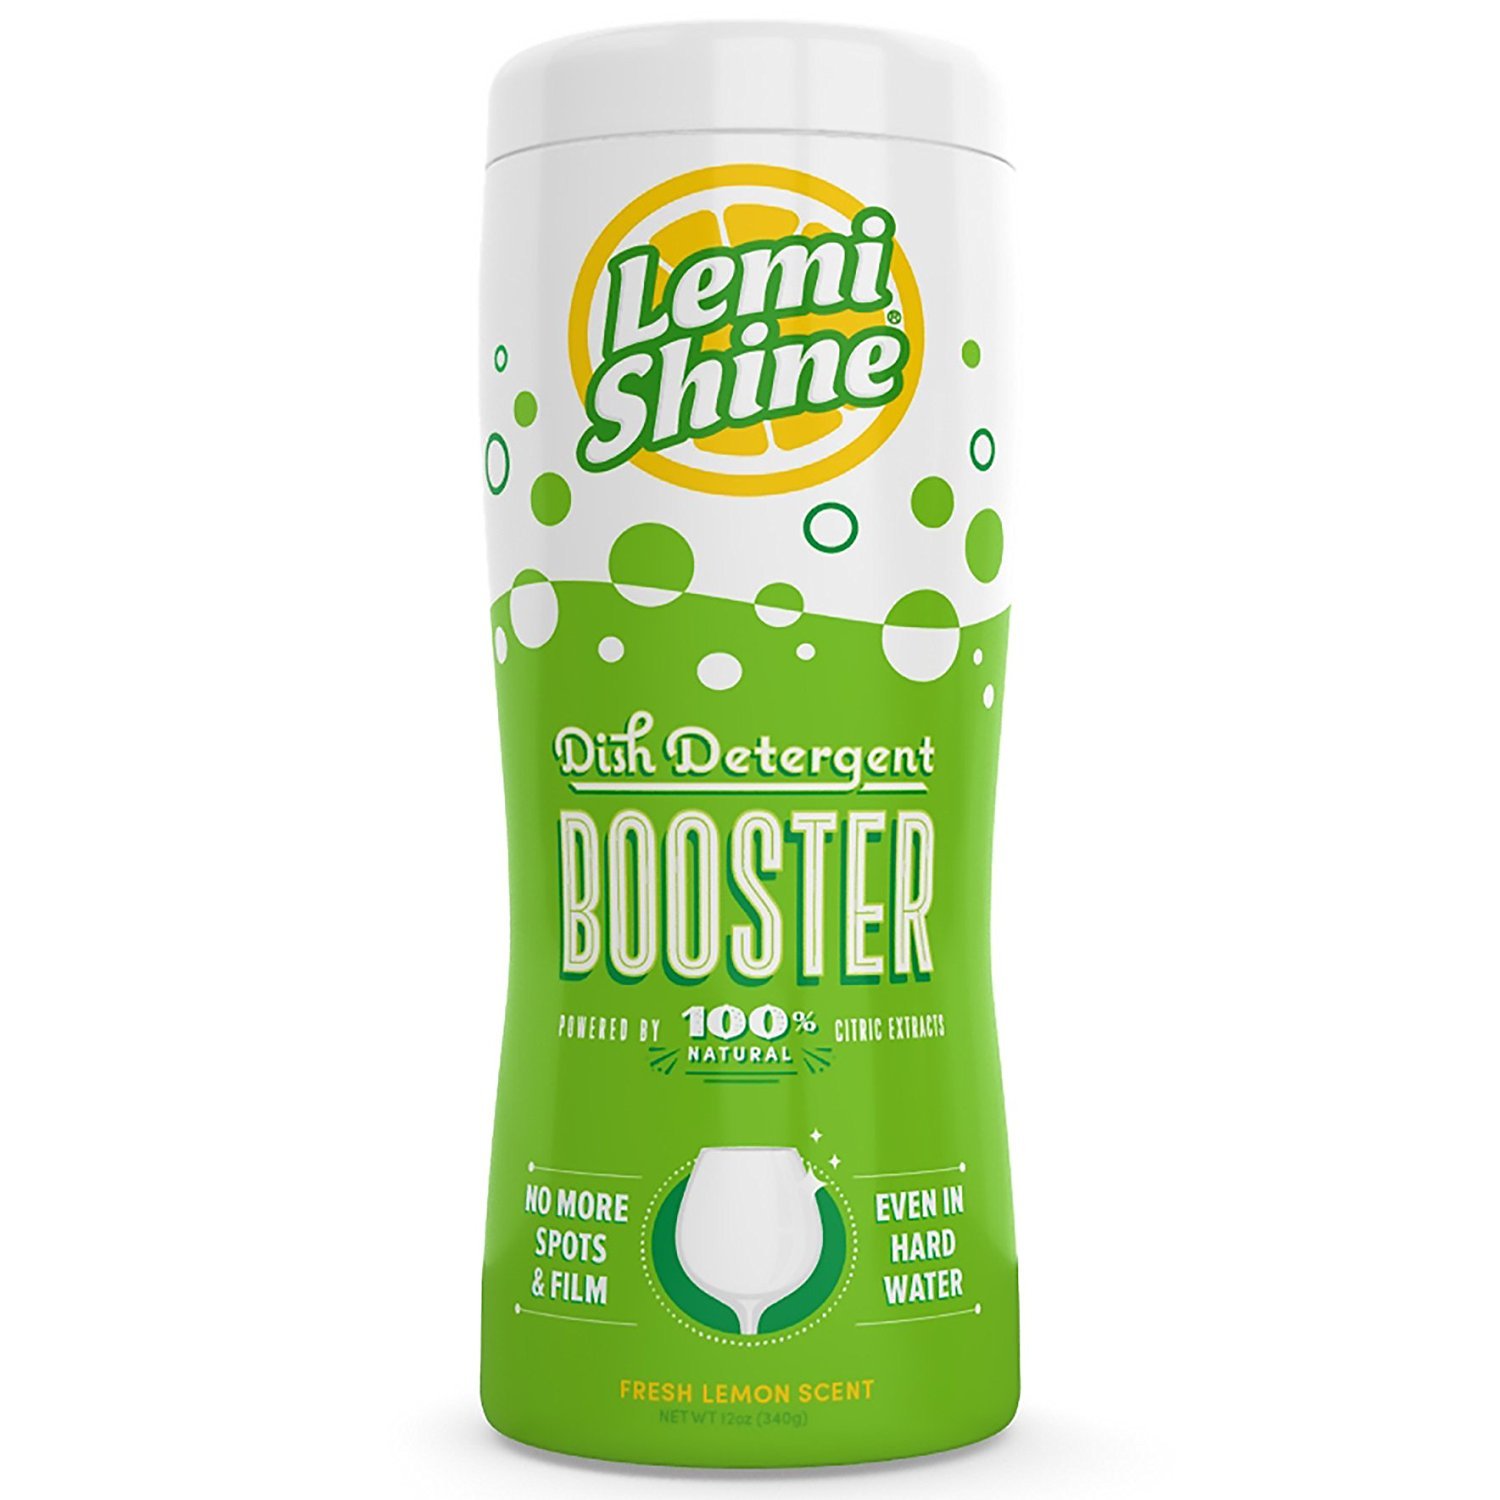 19. Lemi Shine Dish Detergent Booster